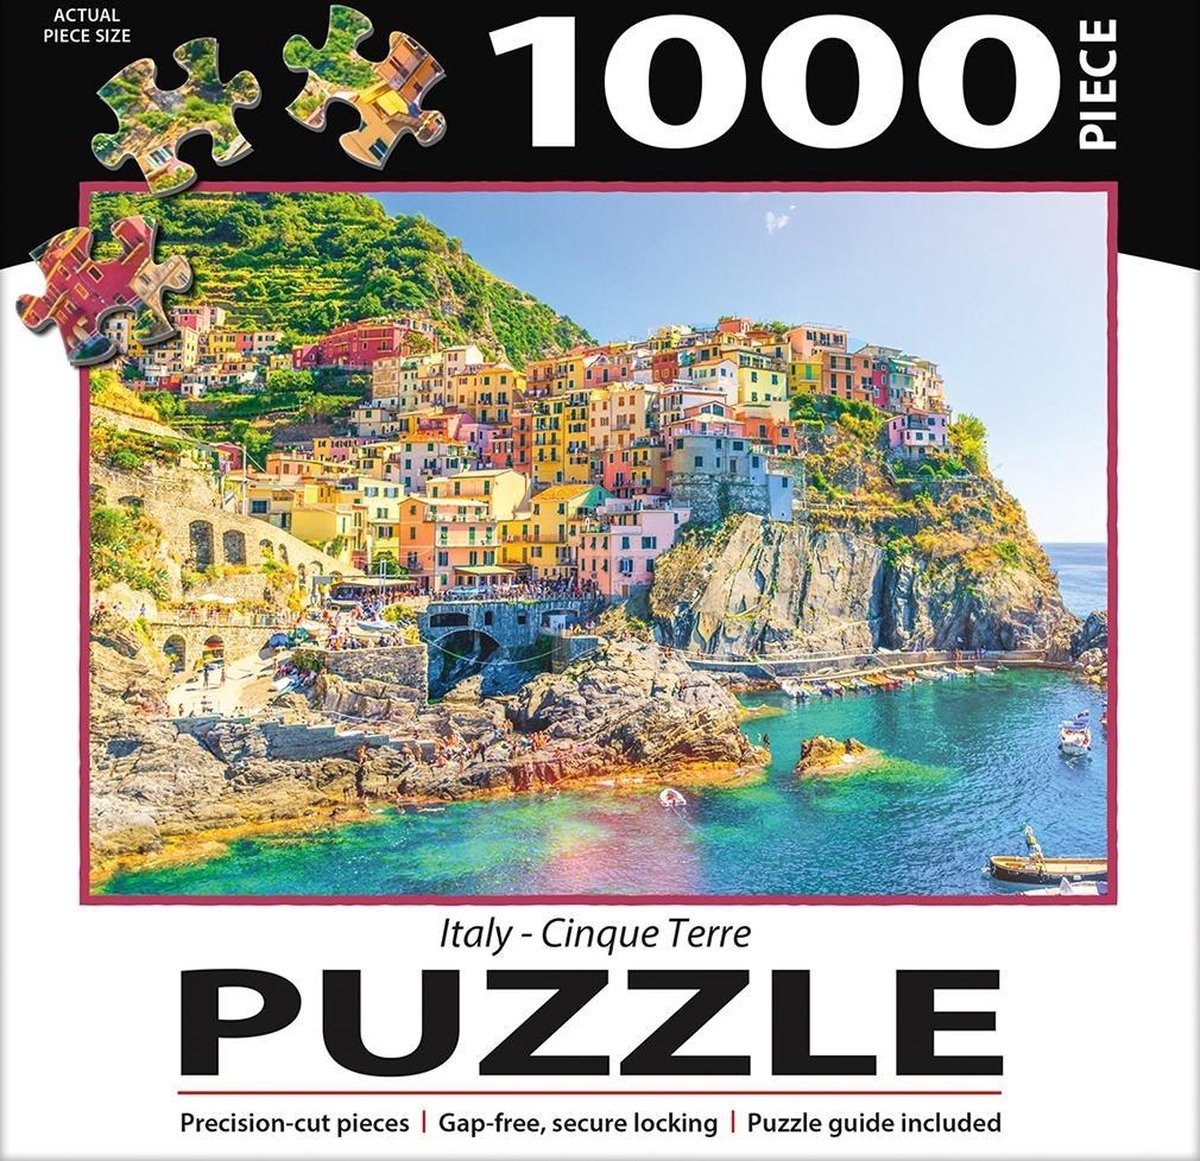 Italie Cinque Terre Puzzle 1000 pièces 